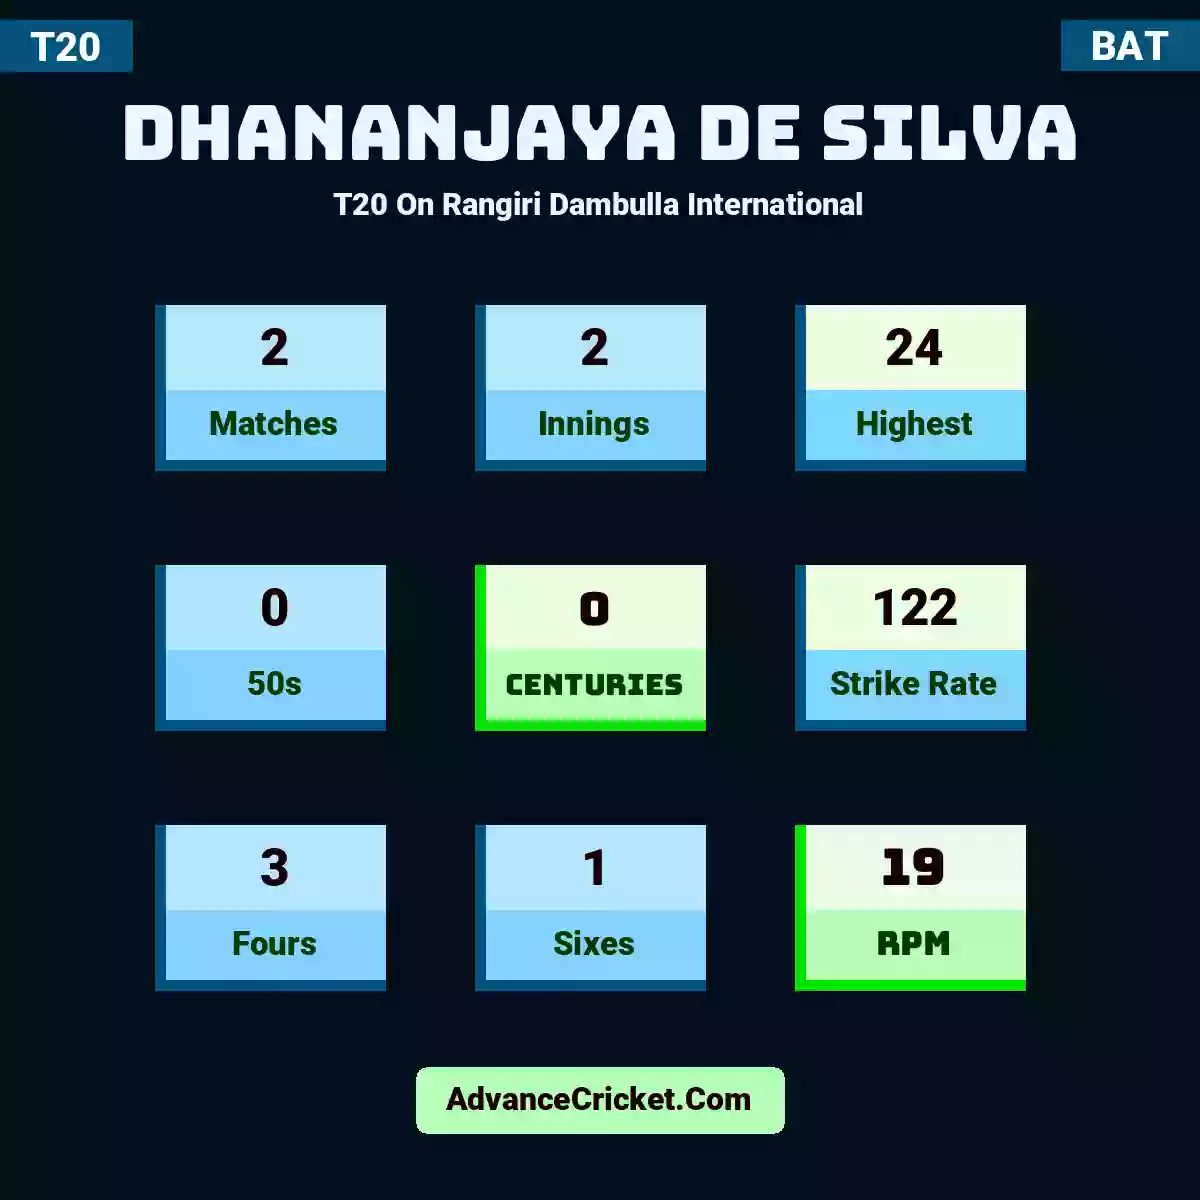 Dhananjaya de Silva T20  On Rangiri Dambulla International, Dhananjaya de Silva played 2 matches, scored 24 runs as highest, 0 half-centuries, and 0 centuries, with a strike rate of 122. D.Silva hit 3 fours and 1 sixes, with an RPM of 19.